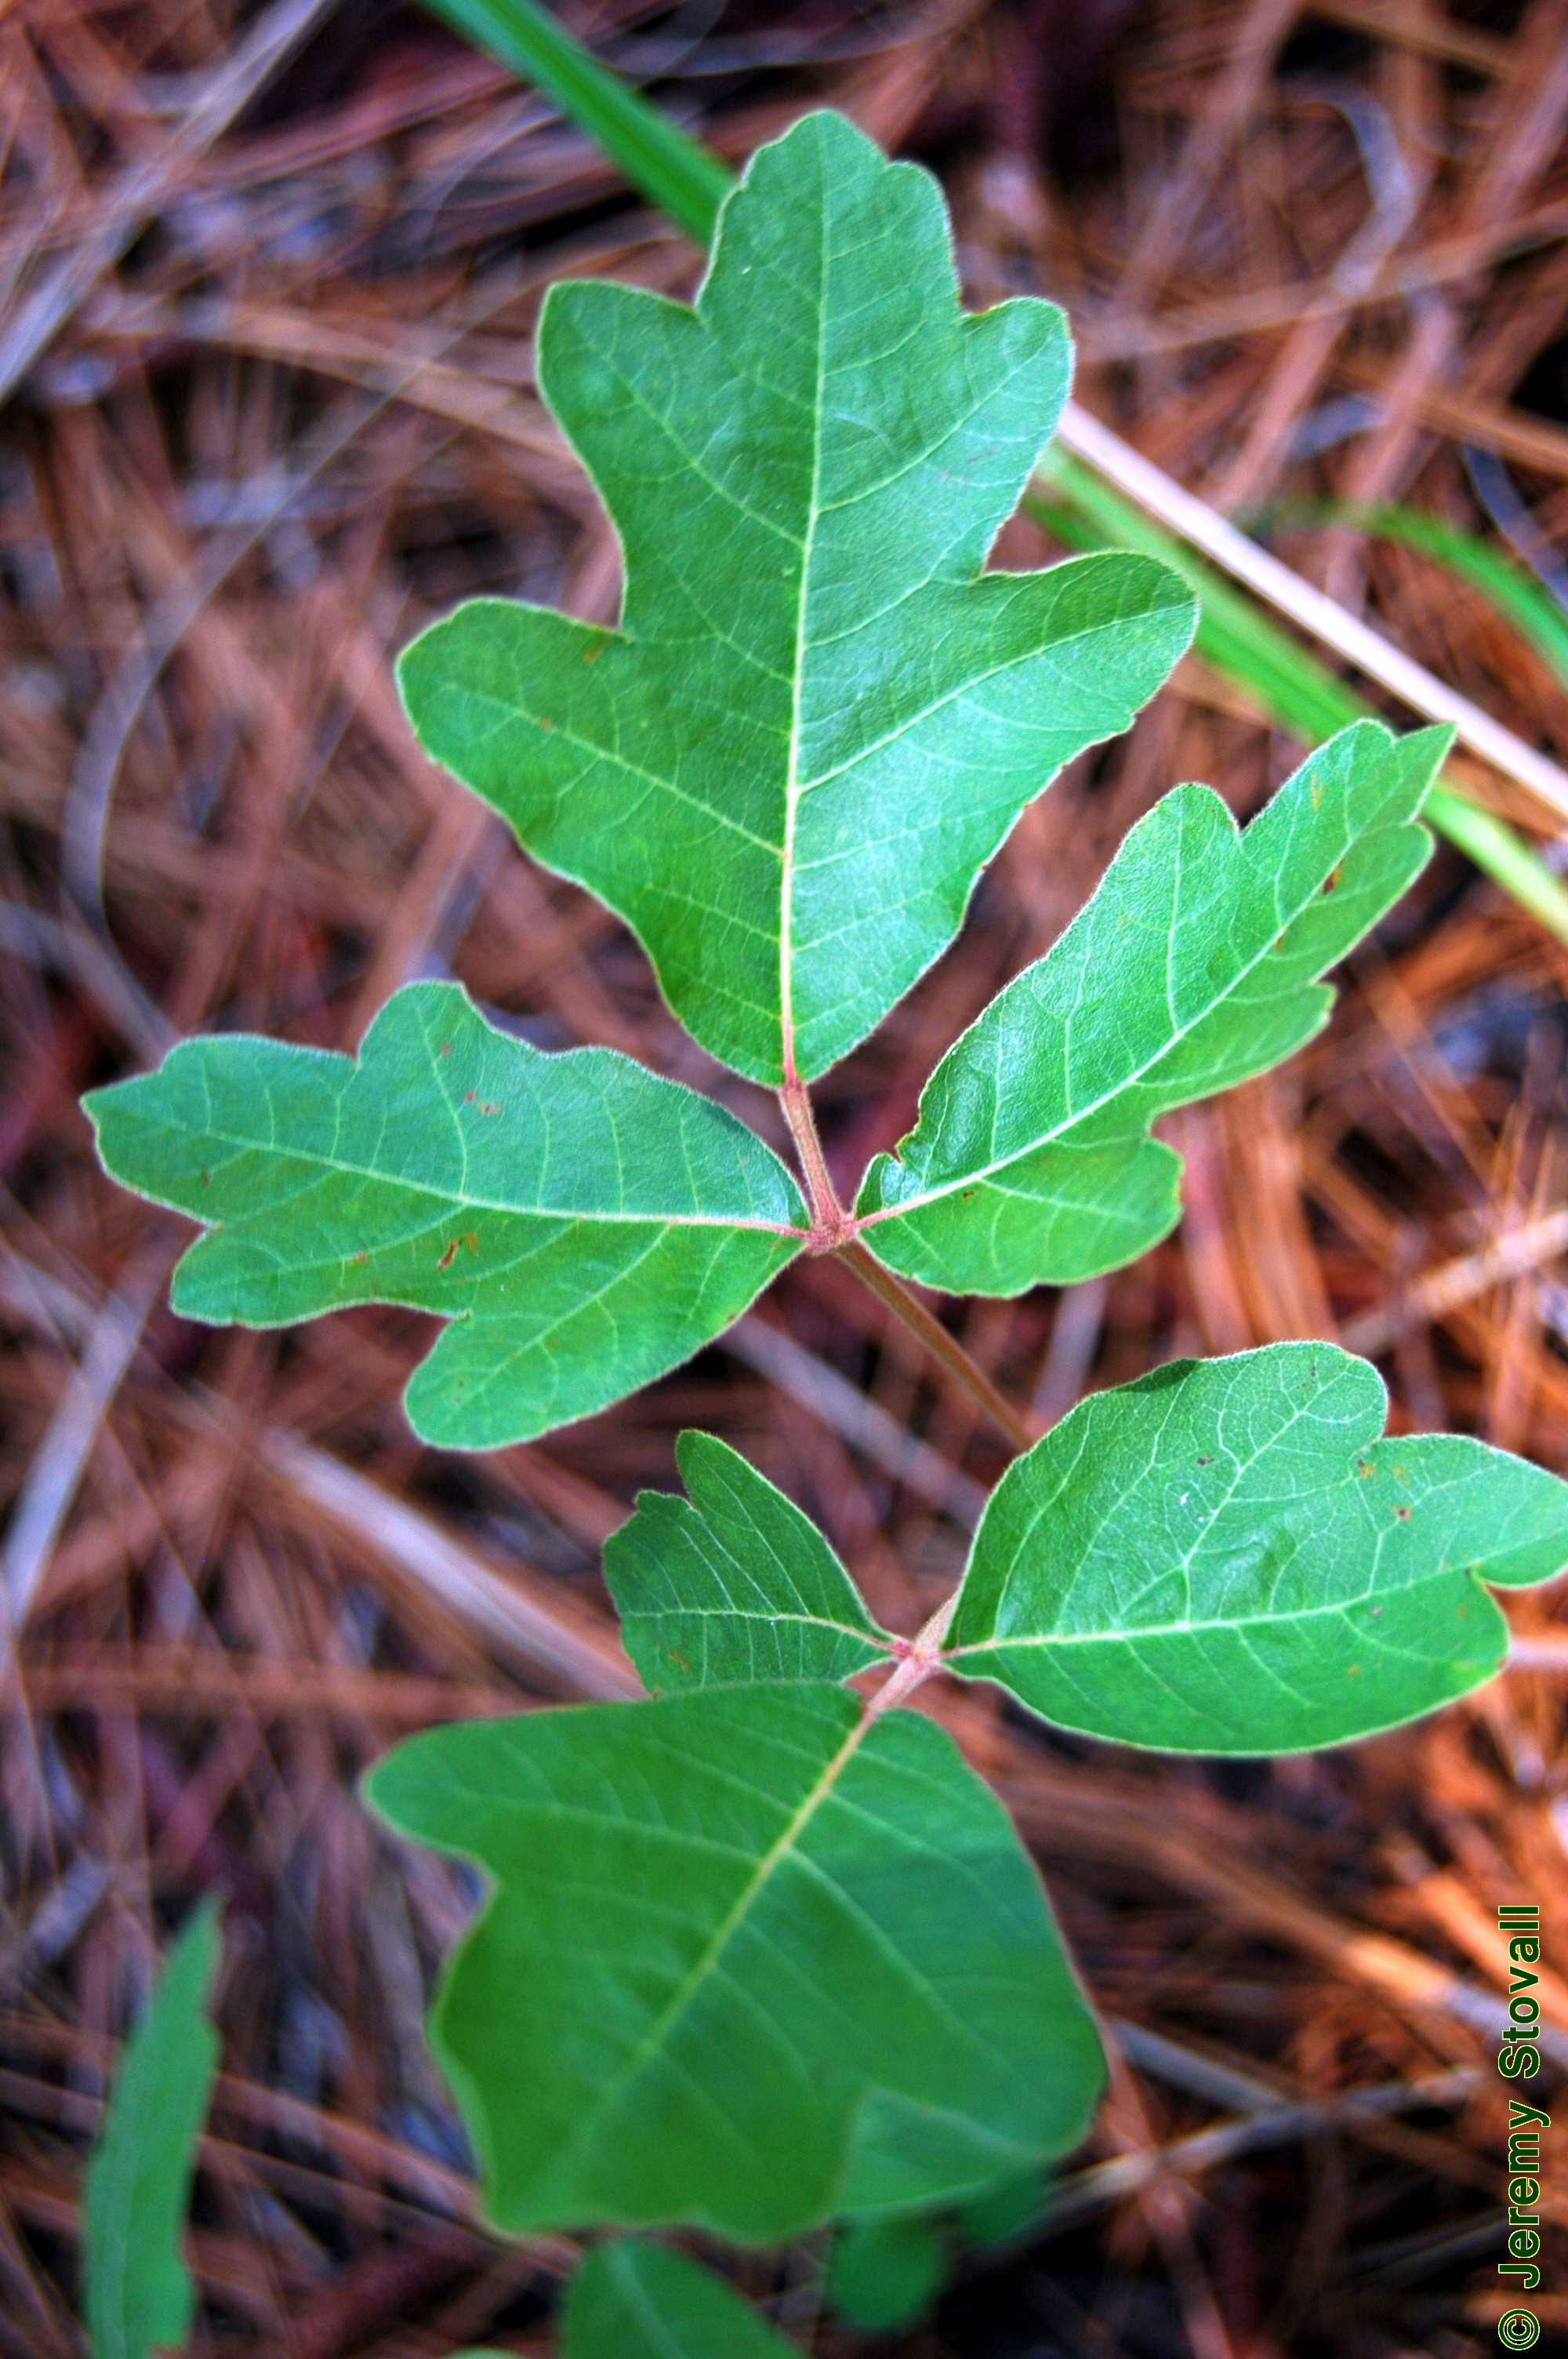 toxicodendron pubescens